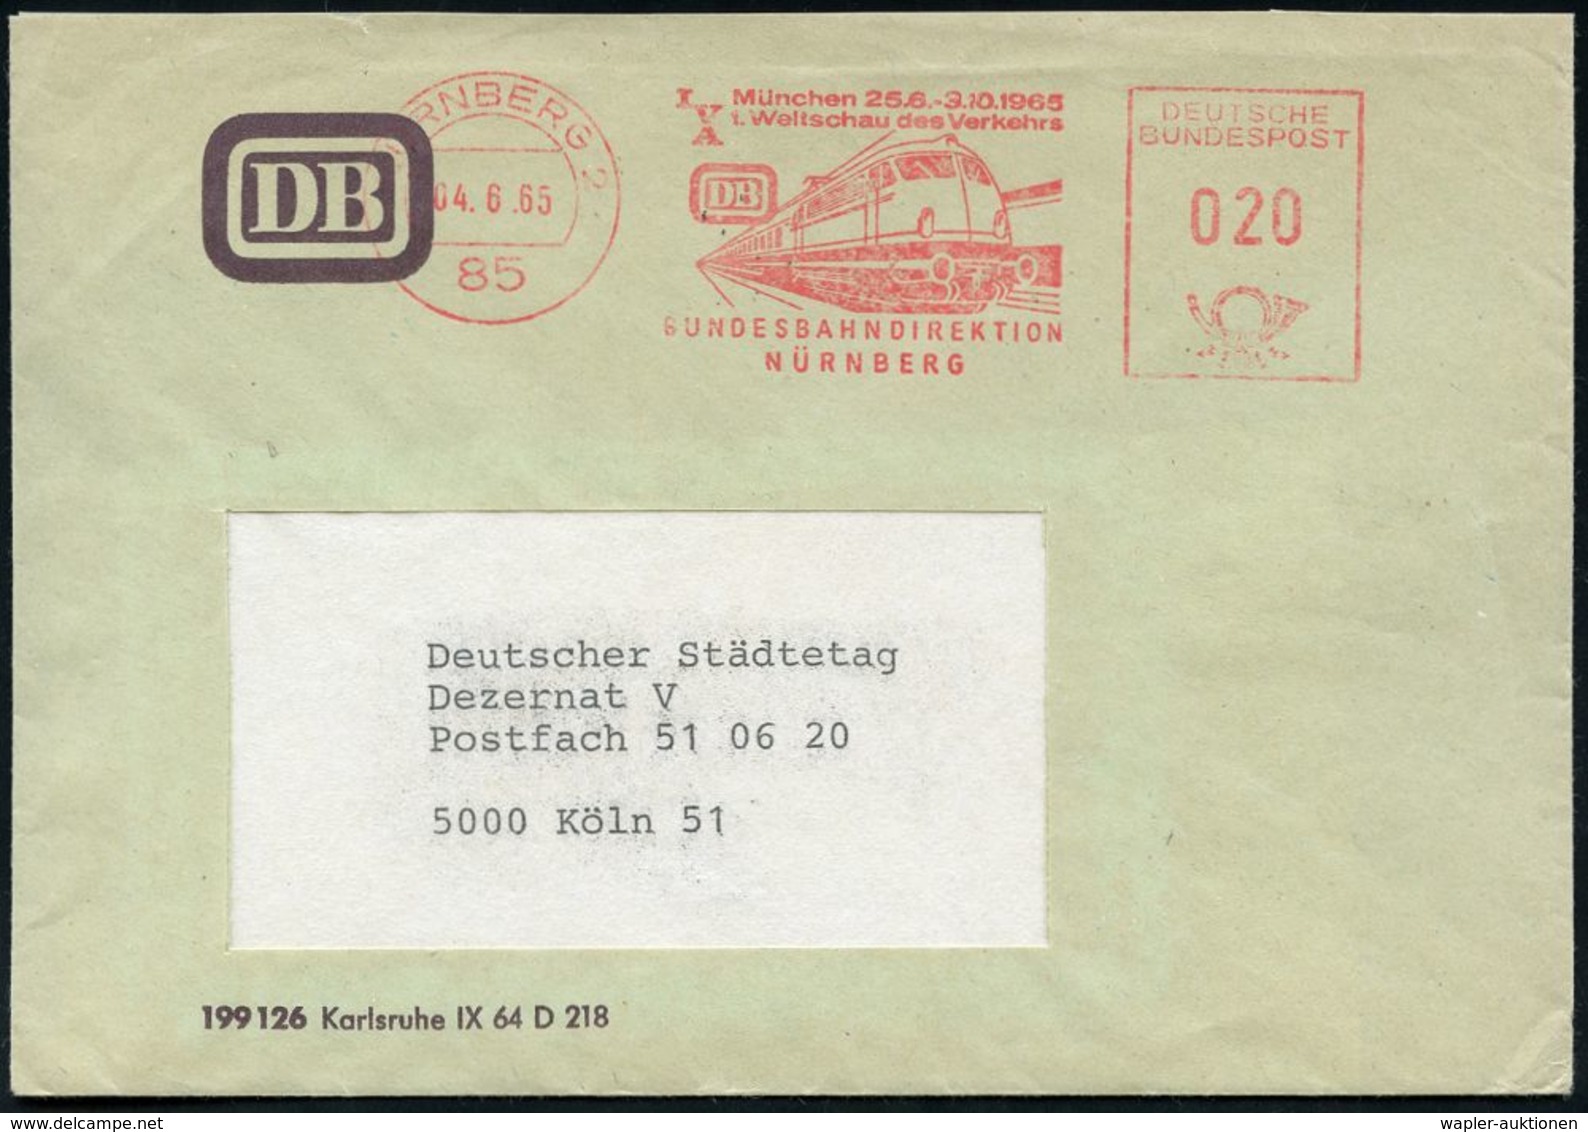 LOKOMOTIVEN & WAGGON-MOTIVE : 85 NÜRNBERG 2/ IVA/ München../ 1.Weltschau D.Verkehrs/ BUNDESBAHN.. 1965 (4.6.) Seltener A - Trains